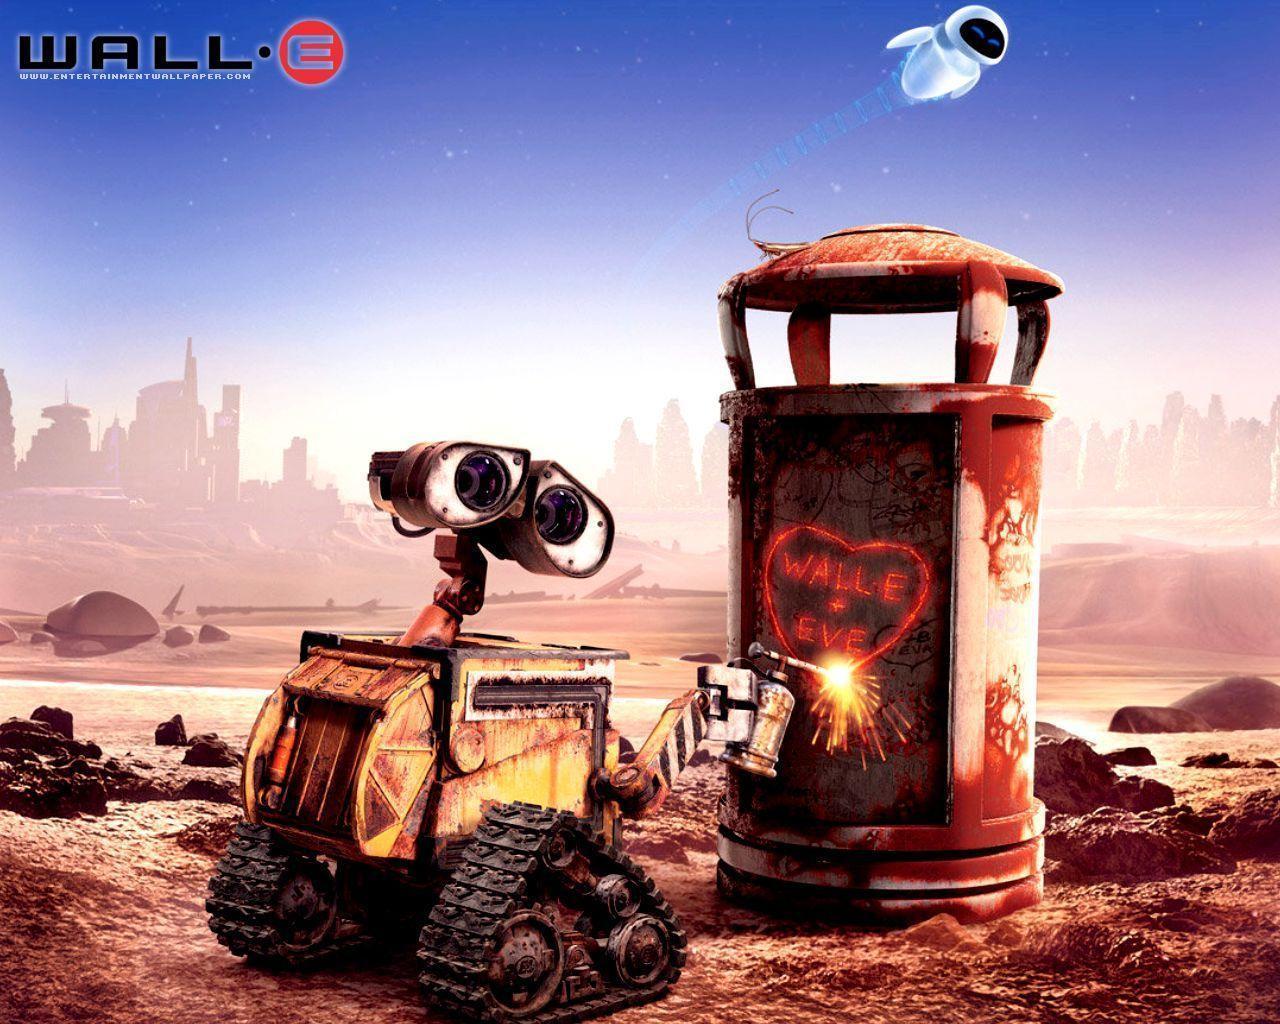 Fondos de WALL-E - Página 4 - 4kwallpaper.org